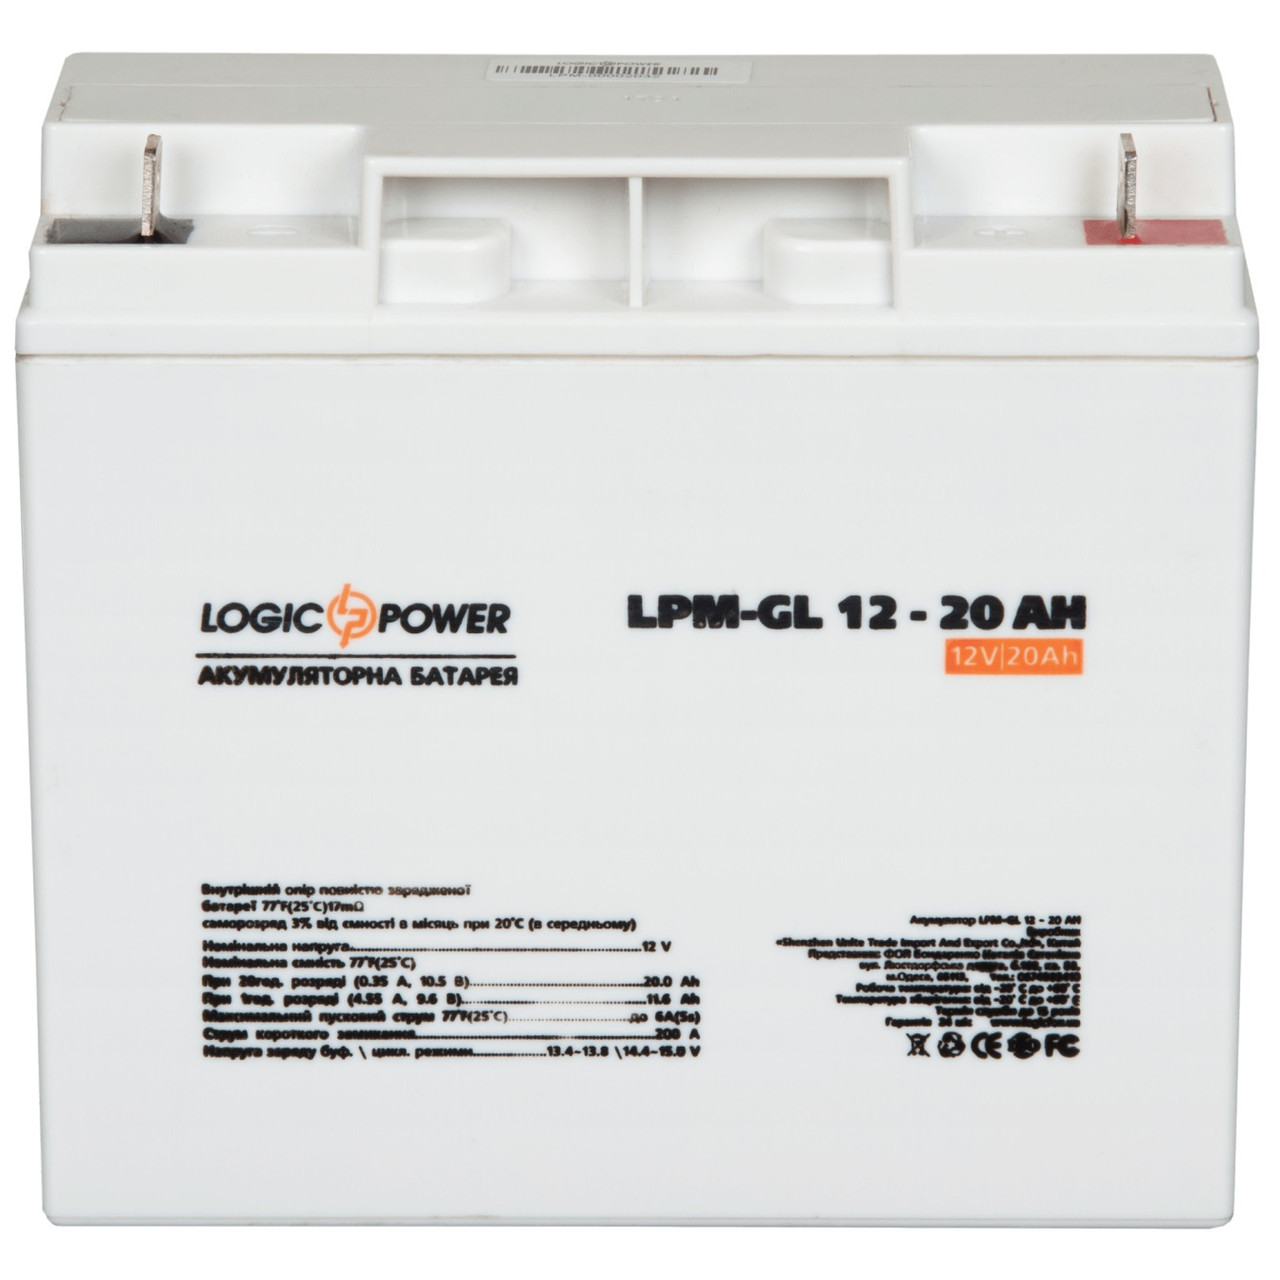 Акумуляторна батарея LogicPower 12В 20AH (LPM-GL 12 - 20 AH) GEL